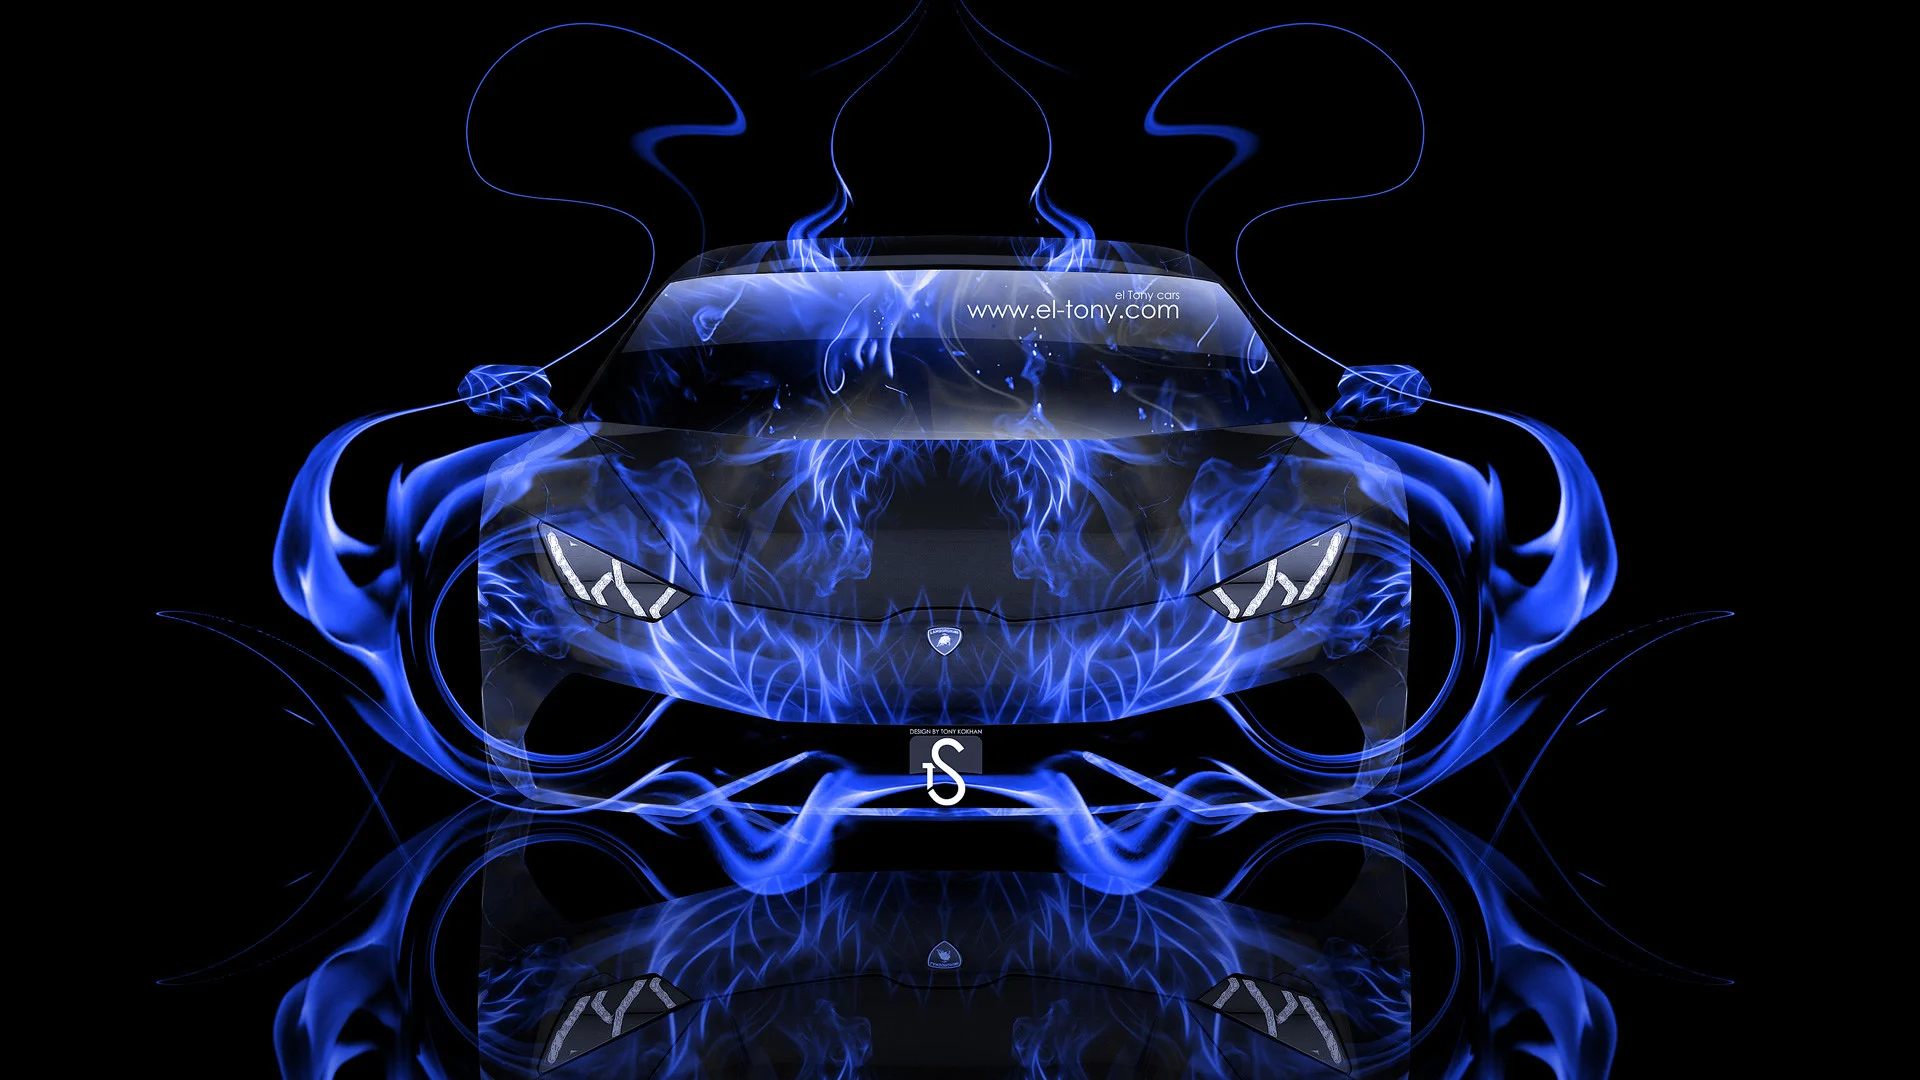 Lamborghini-Huracan-Front-Blue-Fire-Abstract-Car-2014-HD .